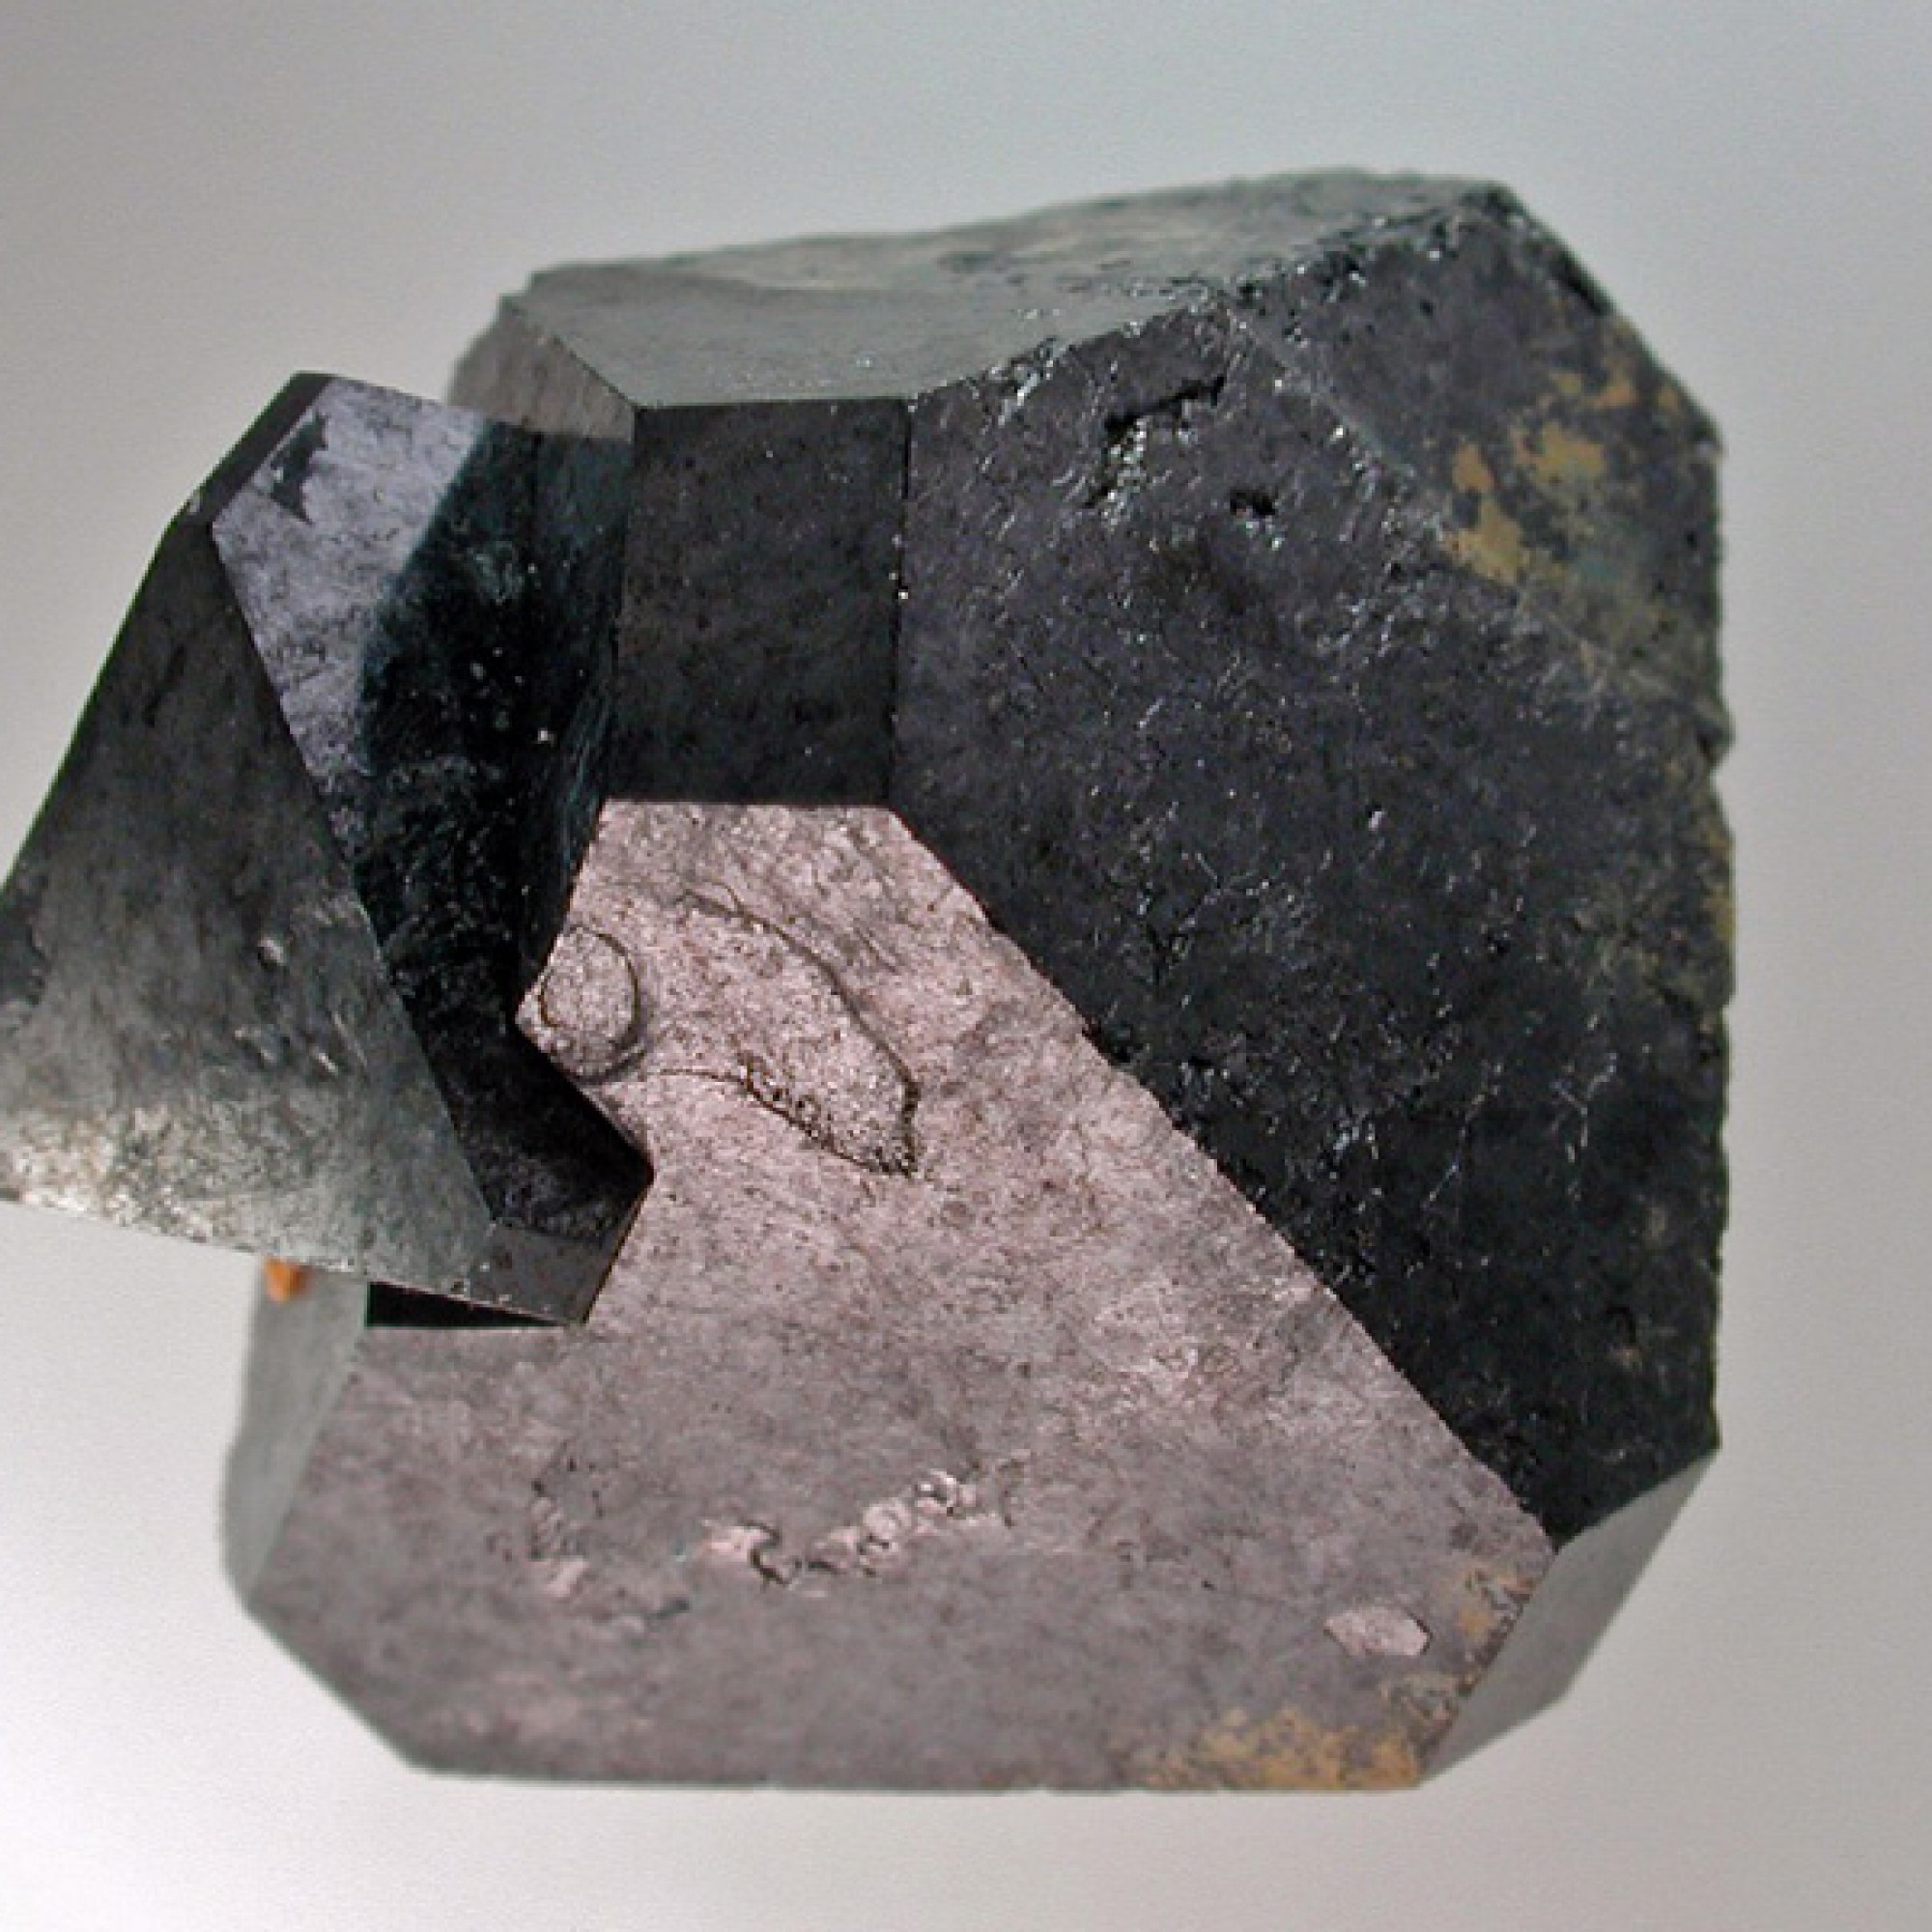 Perowskite (Kelly, CC BY 3.0, wikimedia.org)